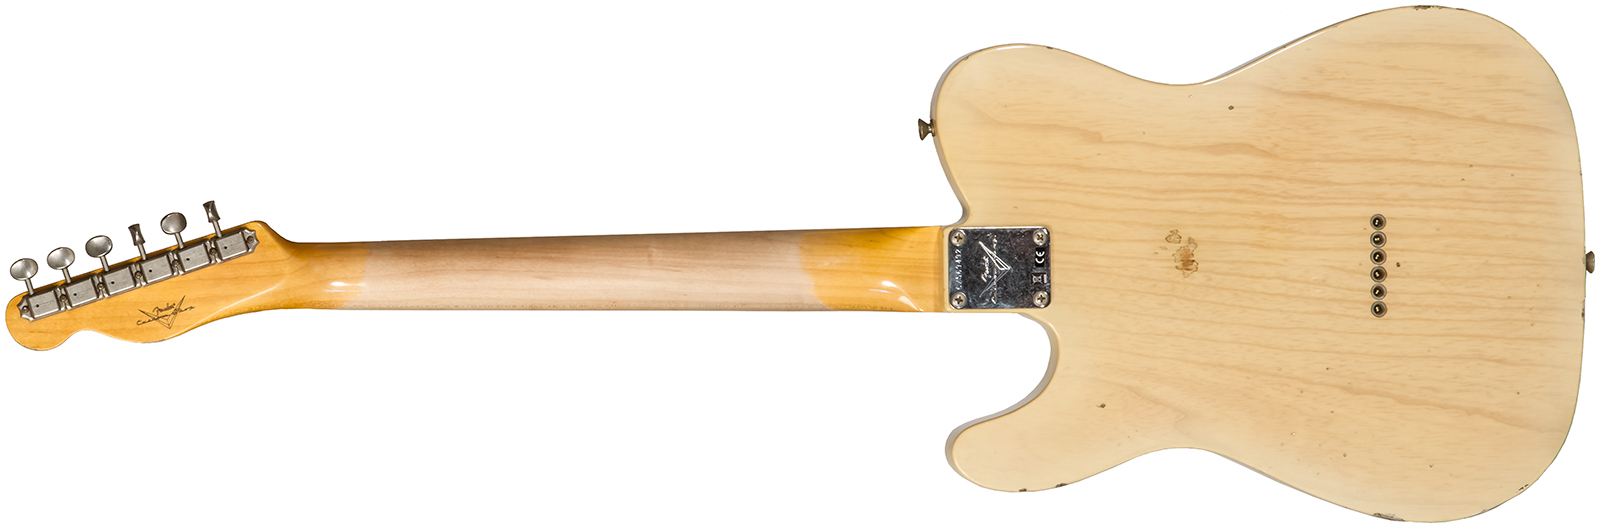 Fender Custom Shop Tele 1960 2s Ht Rw #cz569492 - Relic Natural Blonde - Tel shape electric guitar - Variation 1